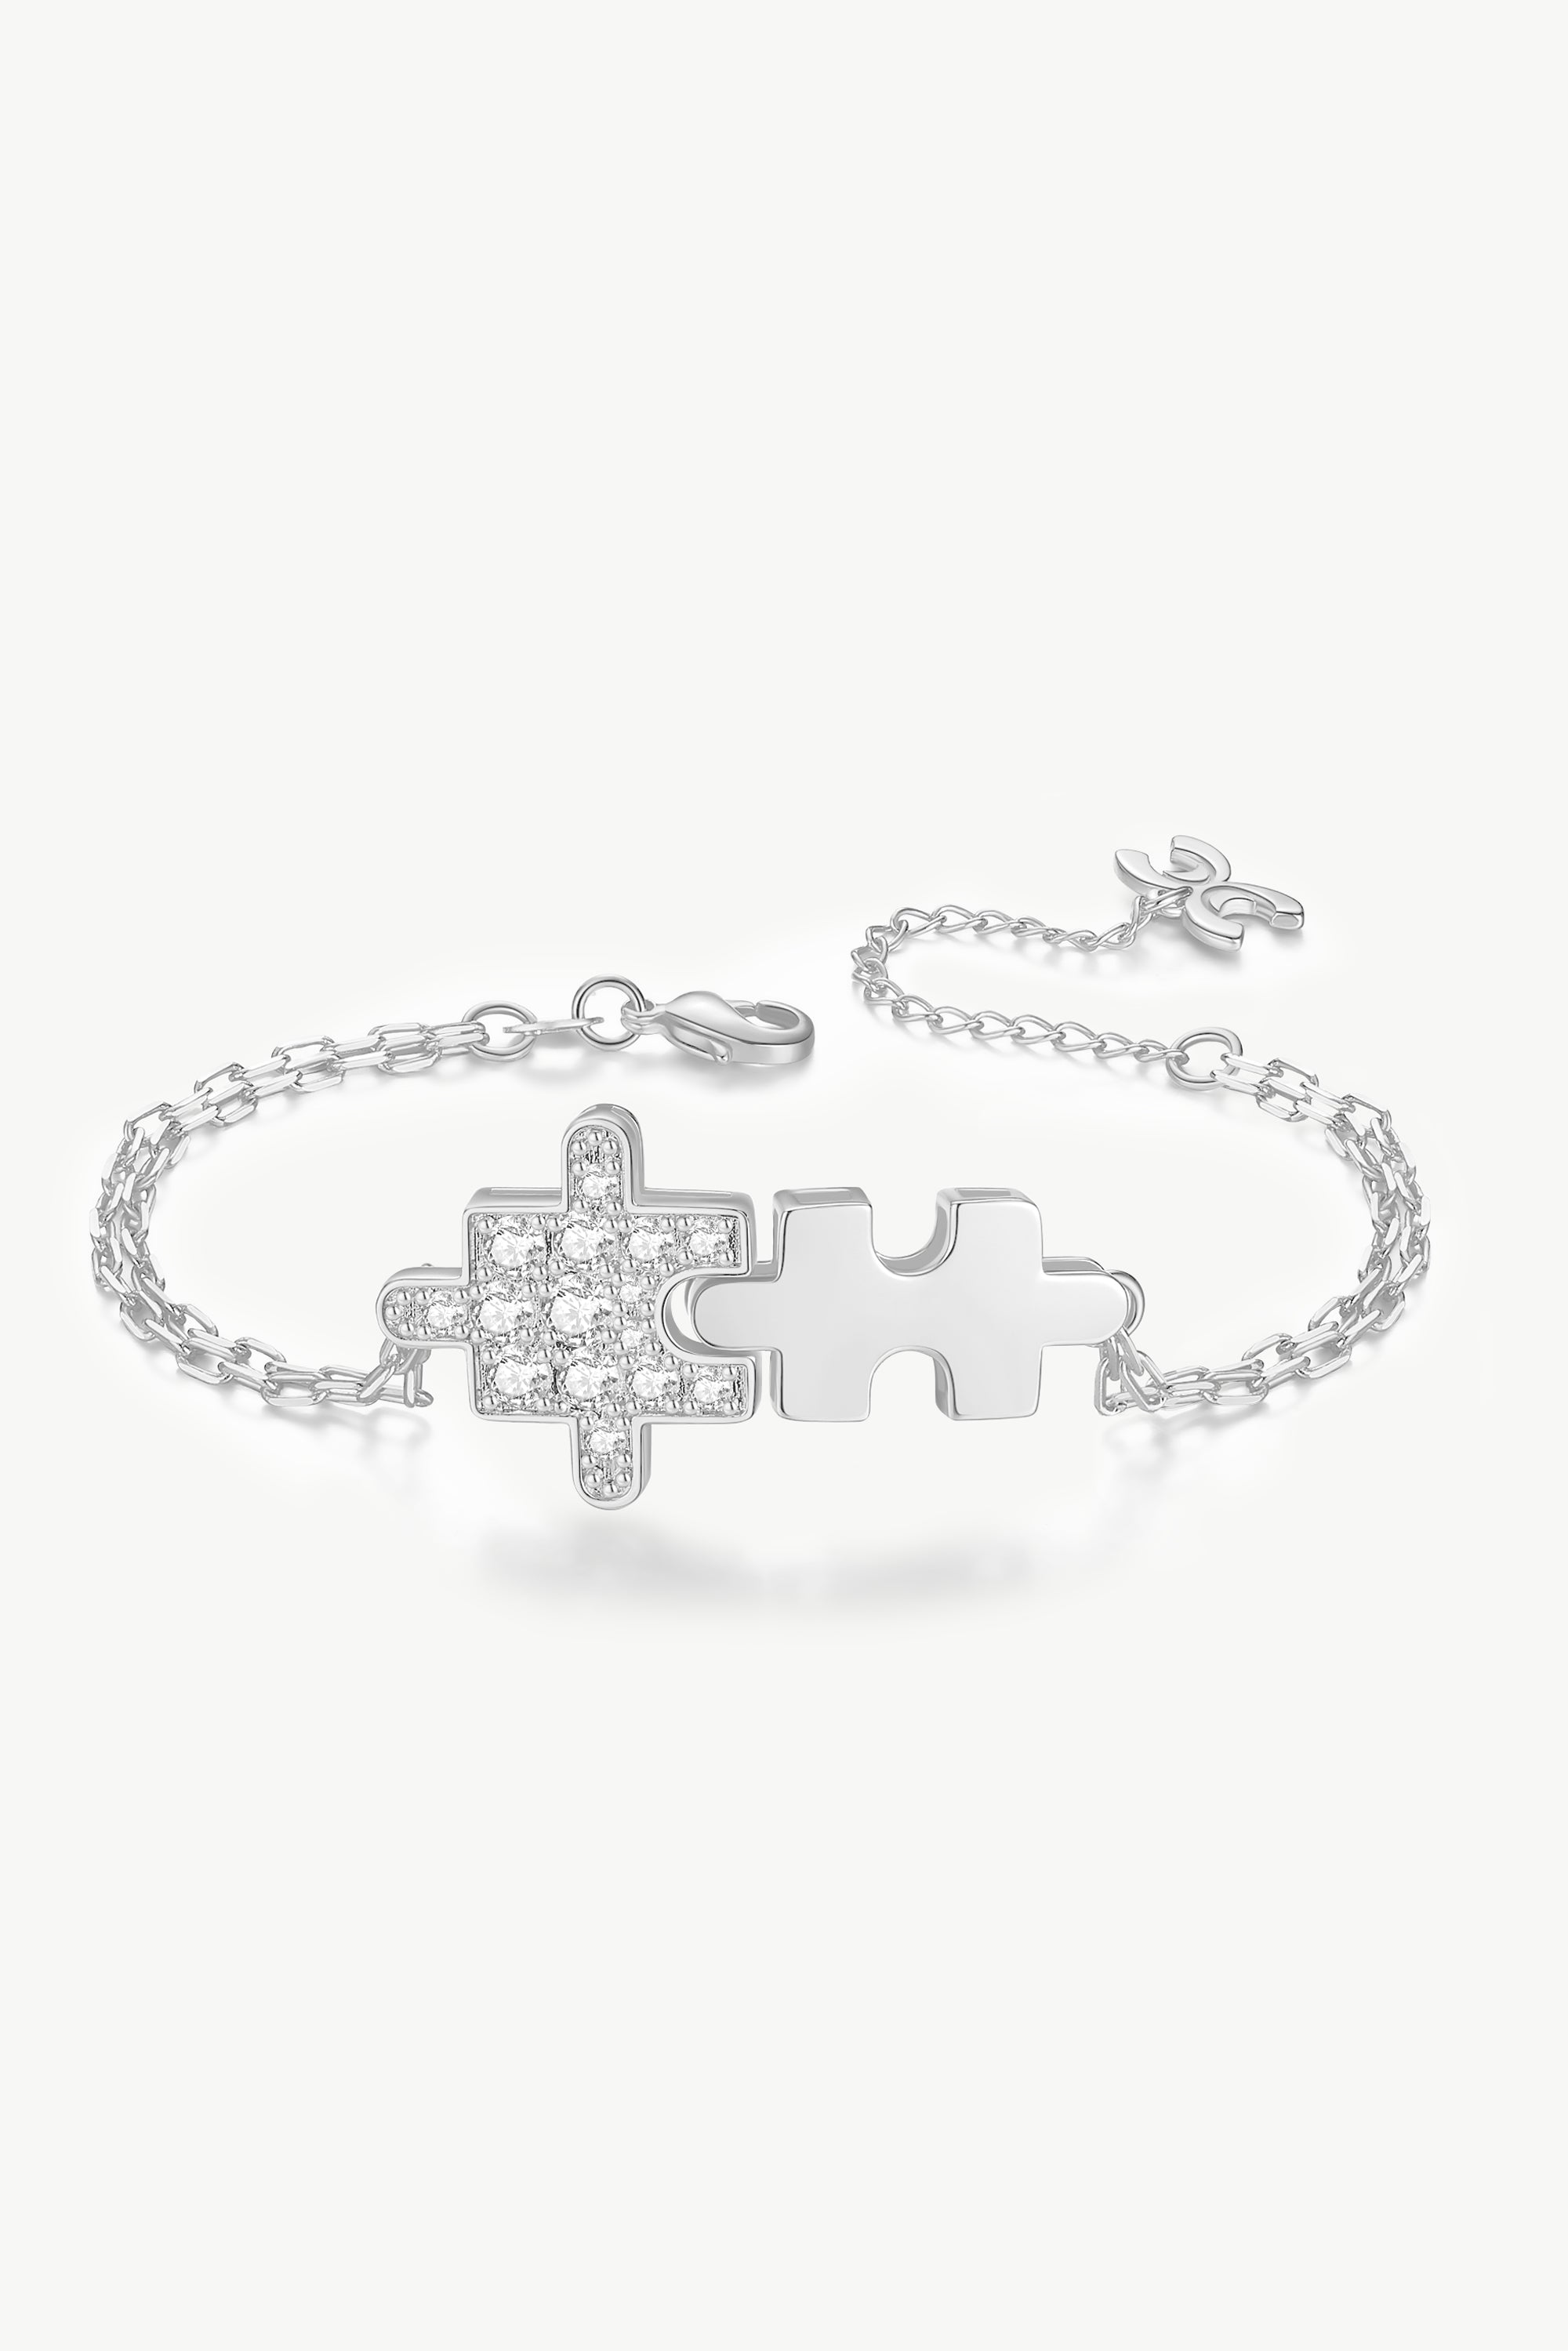 Puzzle Piece Hearts Splittable Friendship Dangle Charm | Sterling silver |  Pandora AU